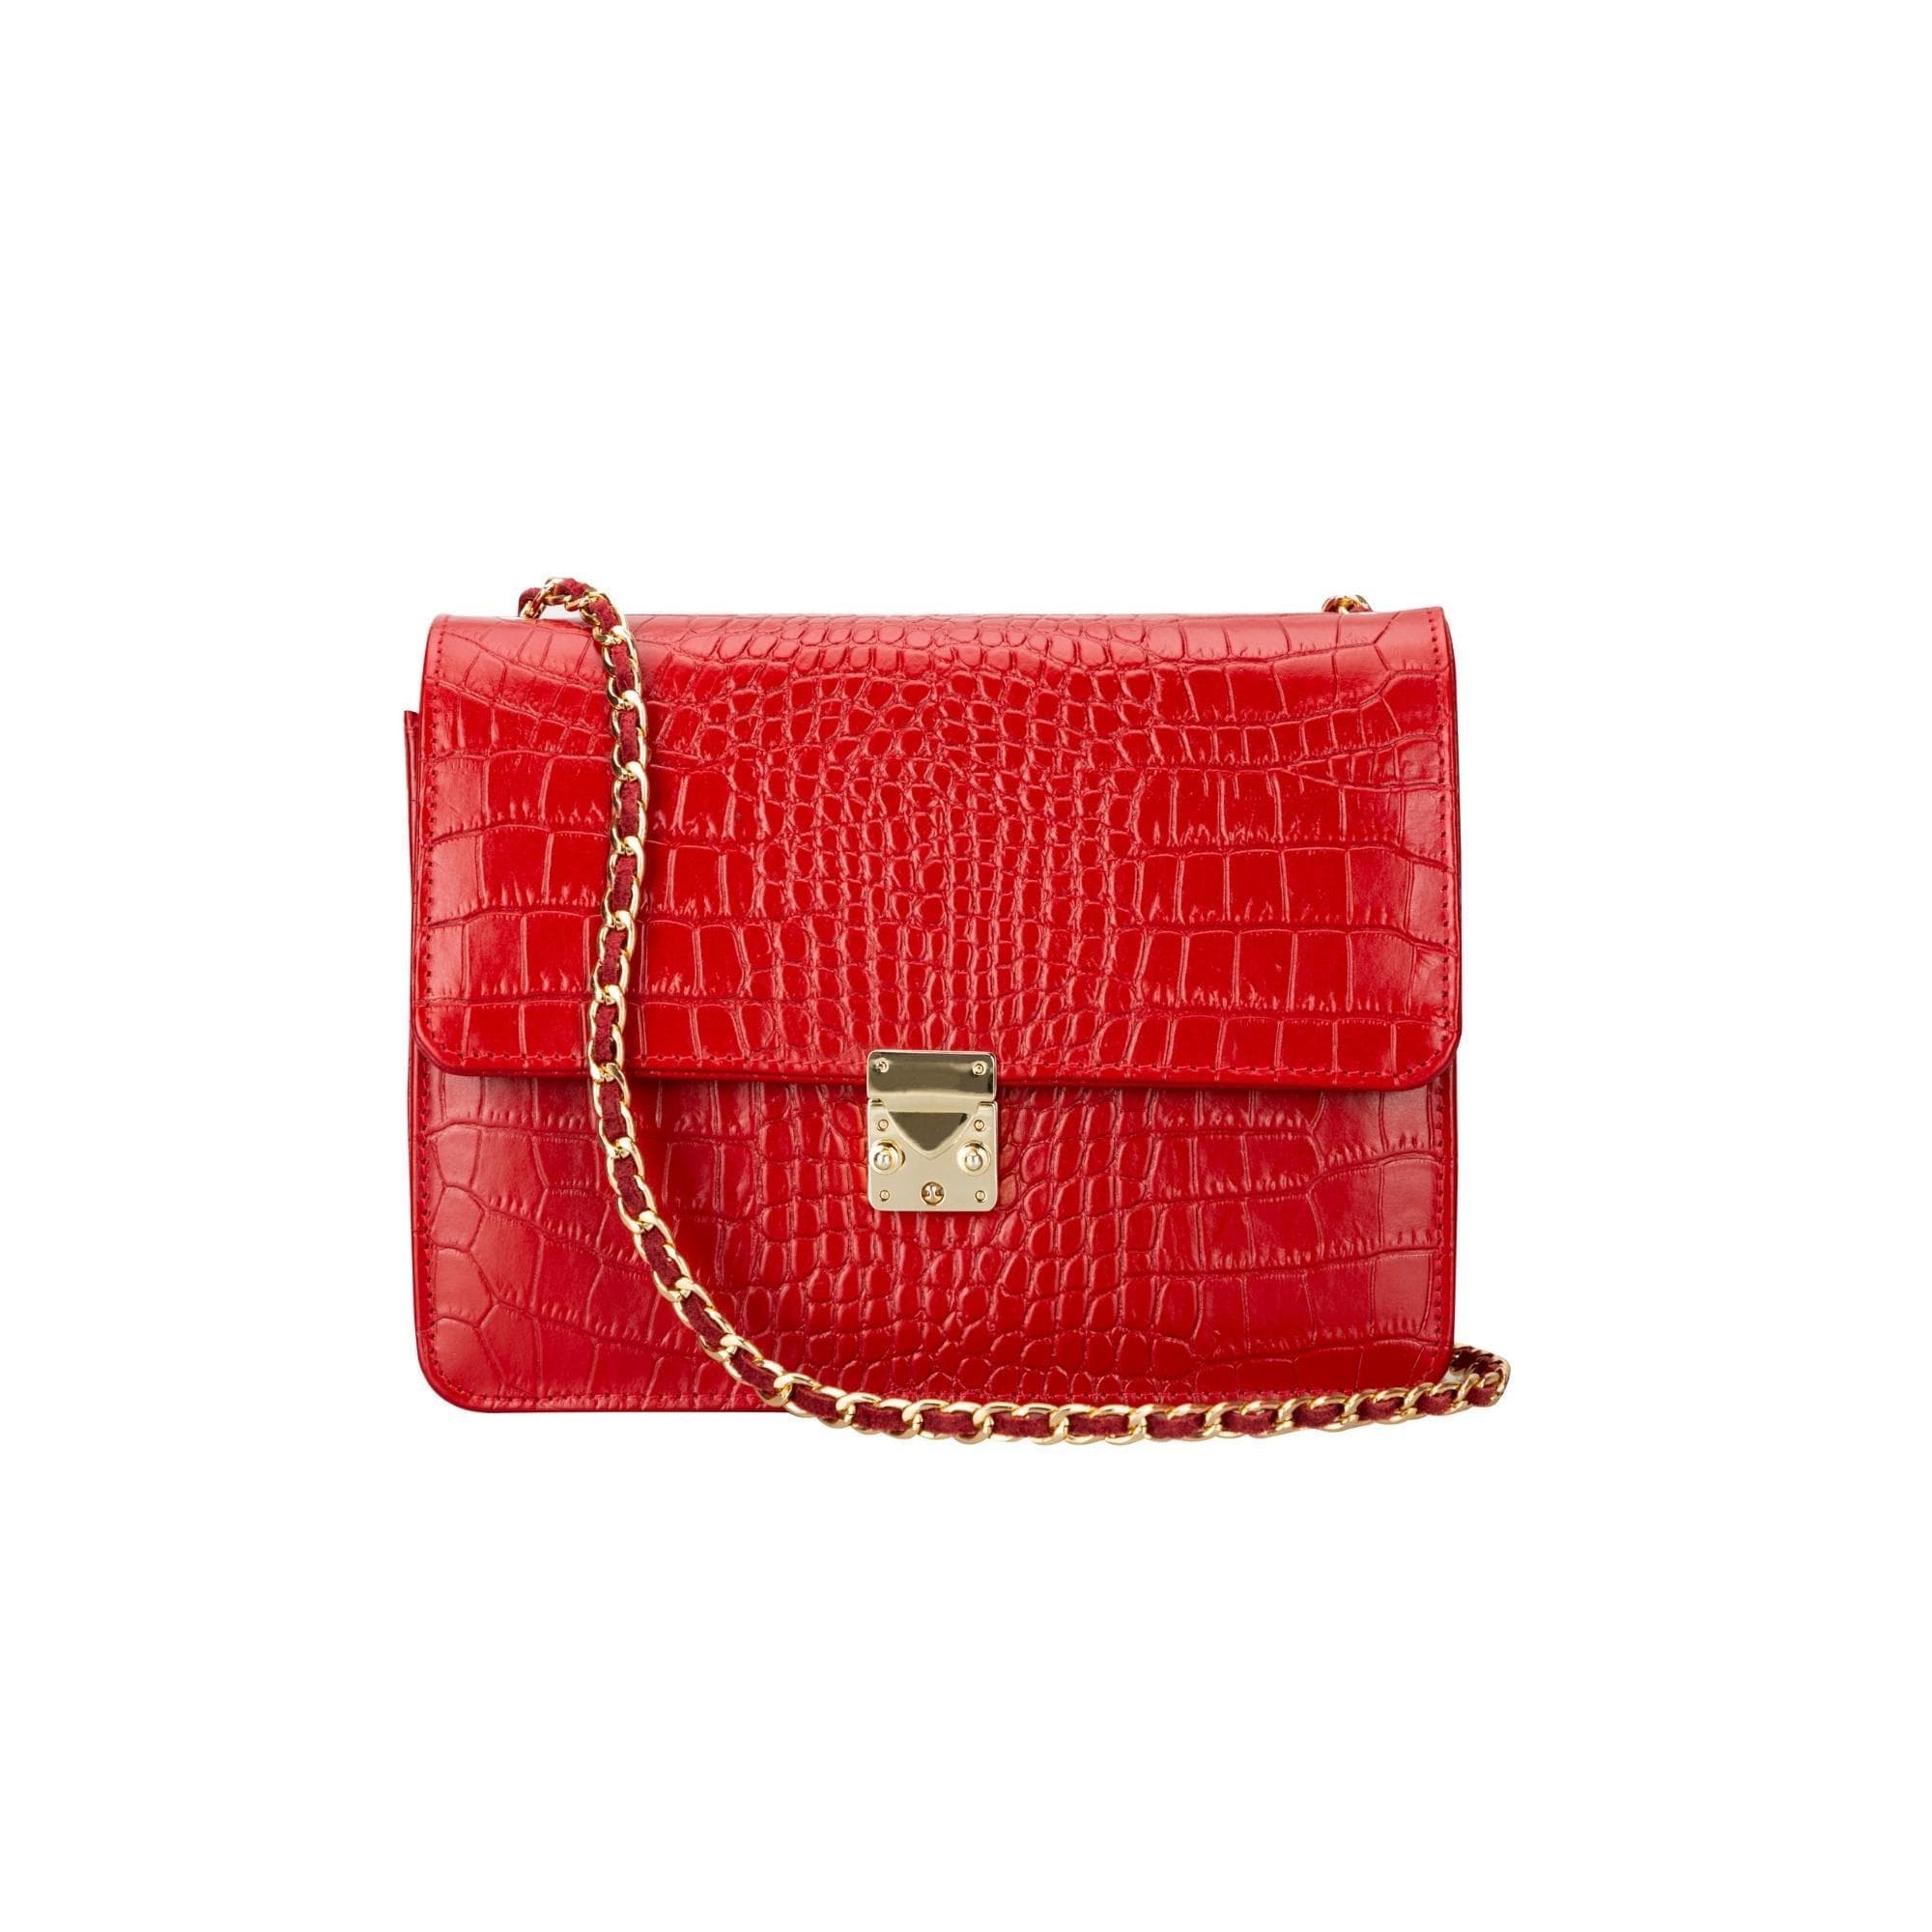 Oxi Geniune Leather Women’s Bag Red Croc Bouletta LTD